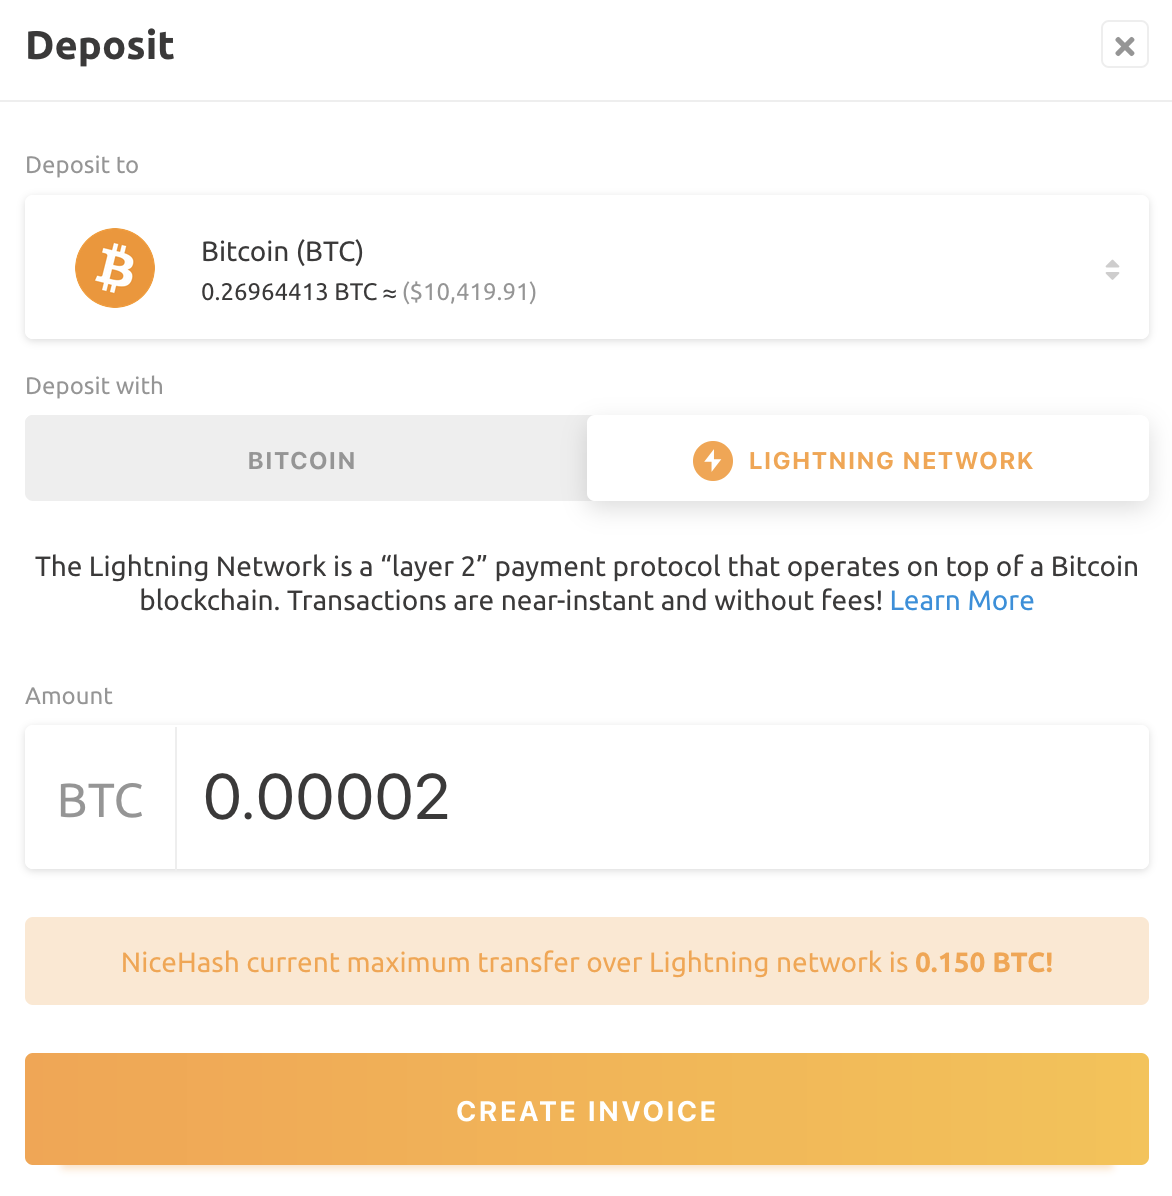 How do I deposit Bitcoin (BTC) with OKX’s lightning network? | OKX